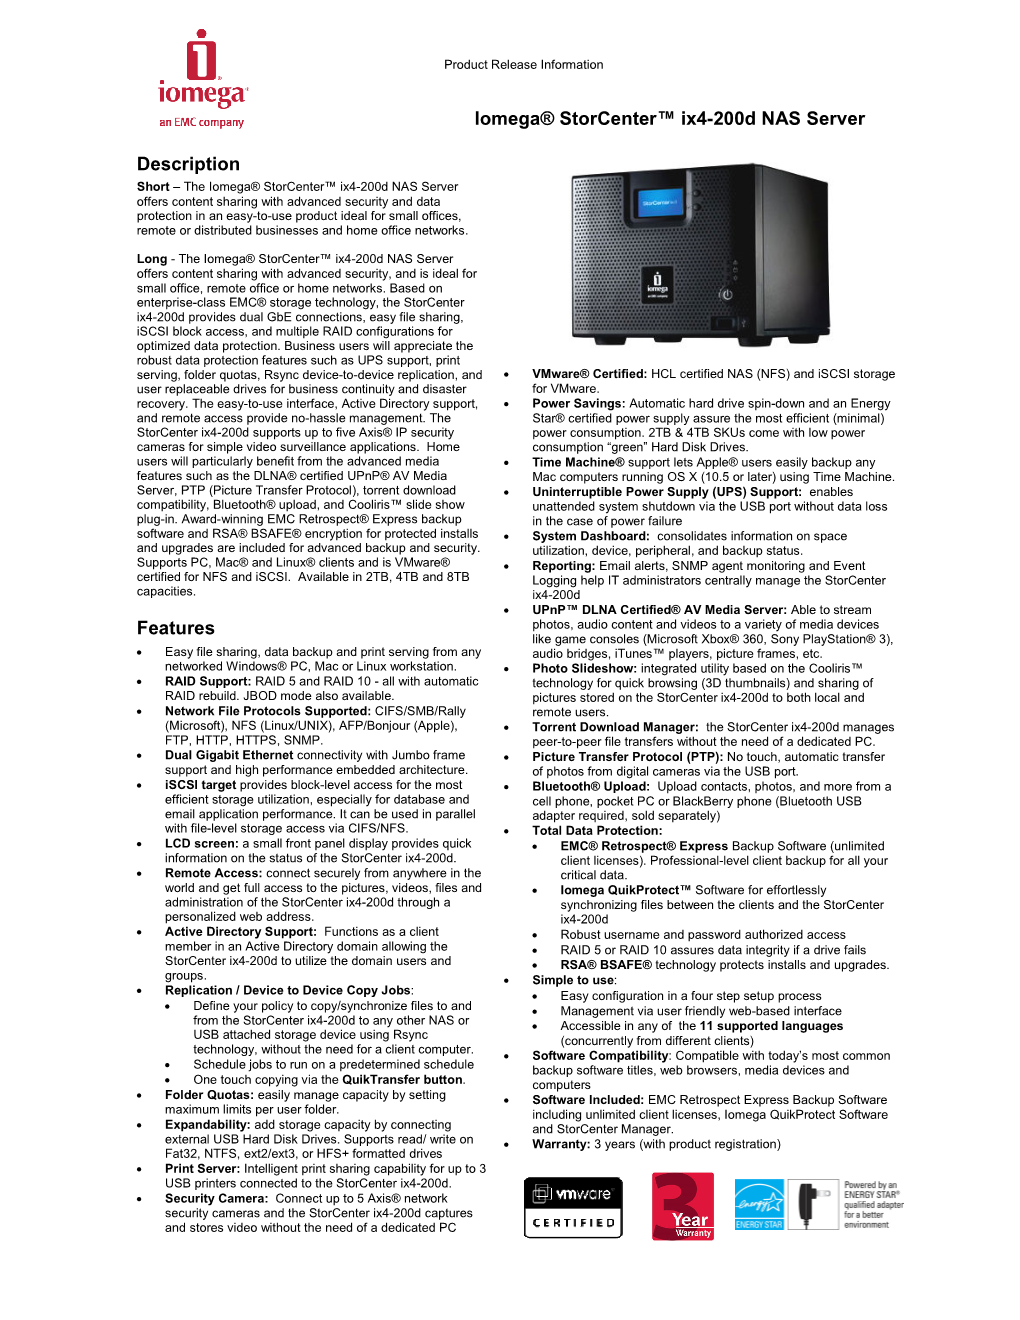 Iomega® Storcenter™ Ix4-200D NAS Server Description Features